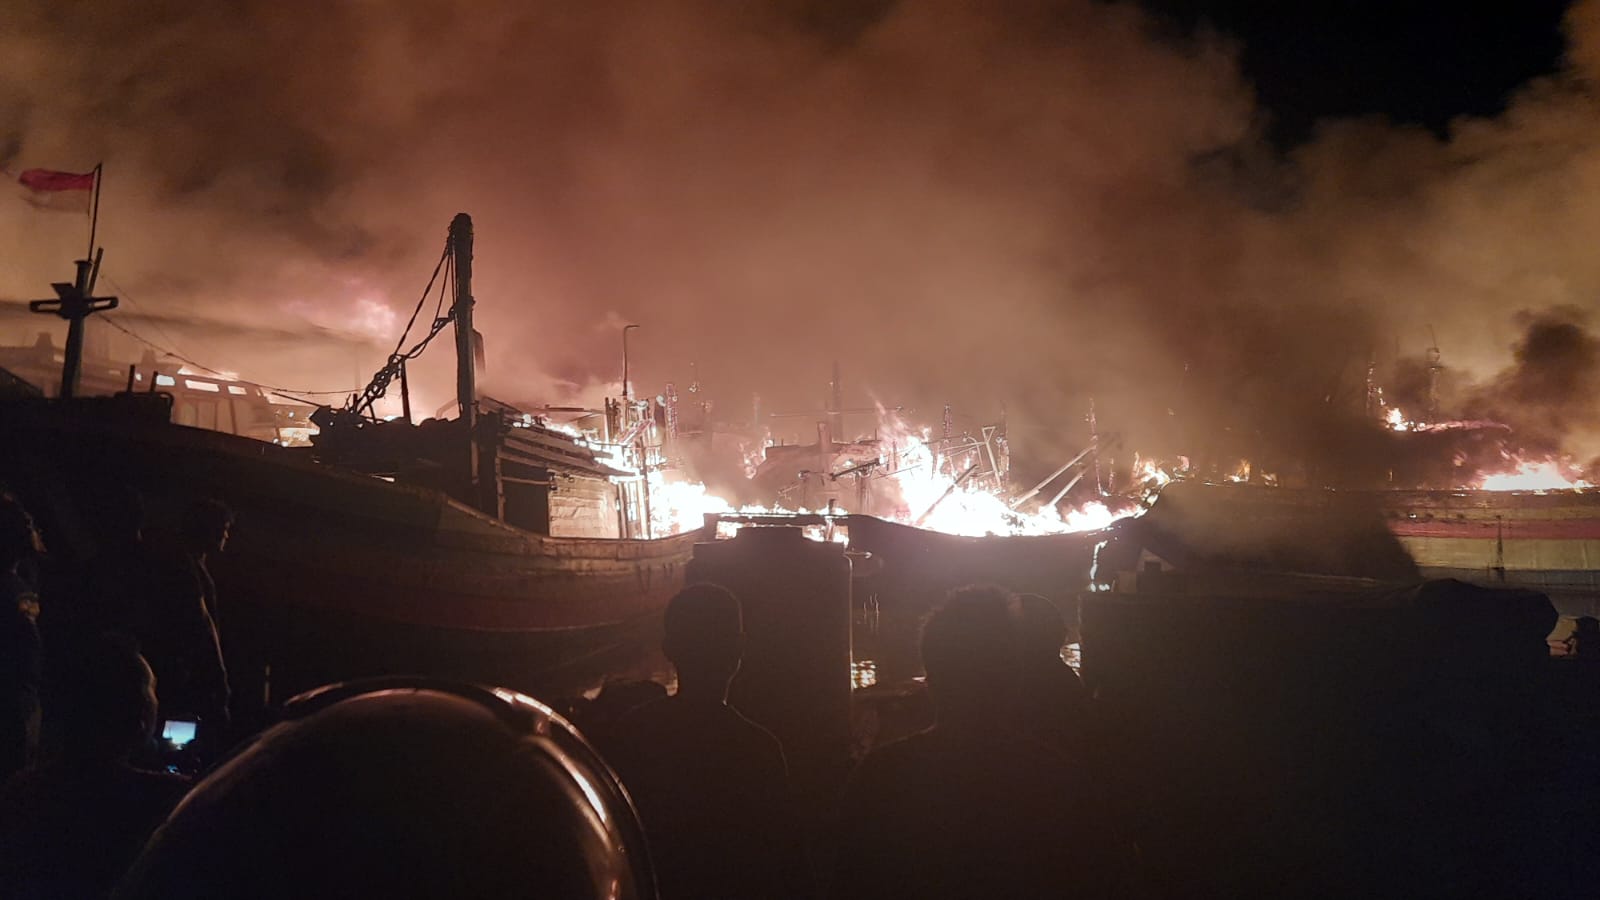 52 Ships in Jongor Port, Tegal Indonesia Burned